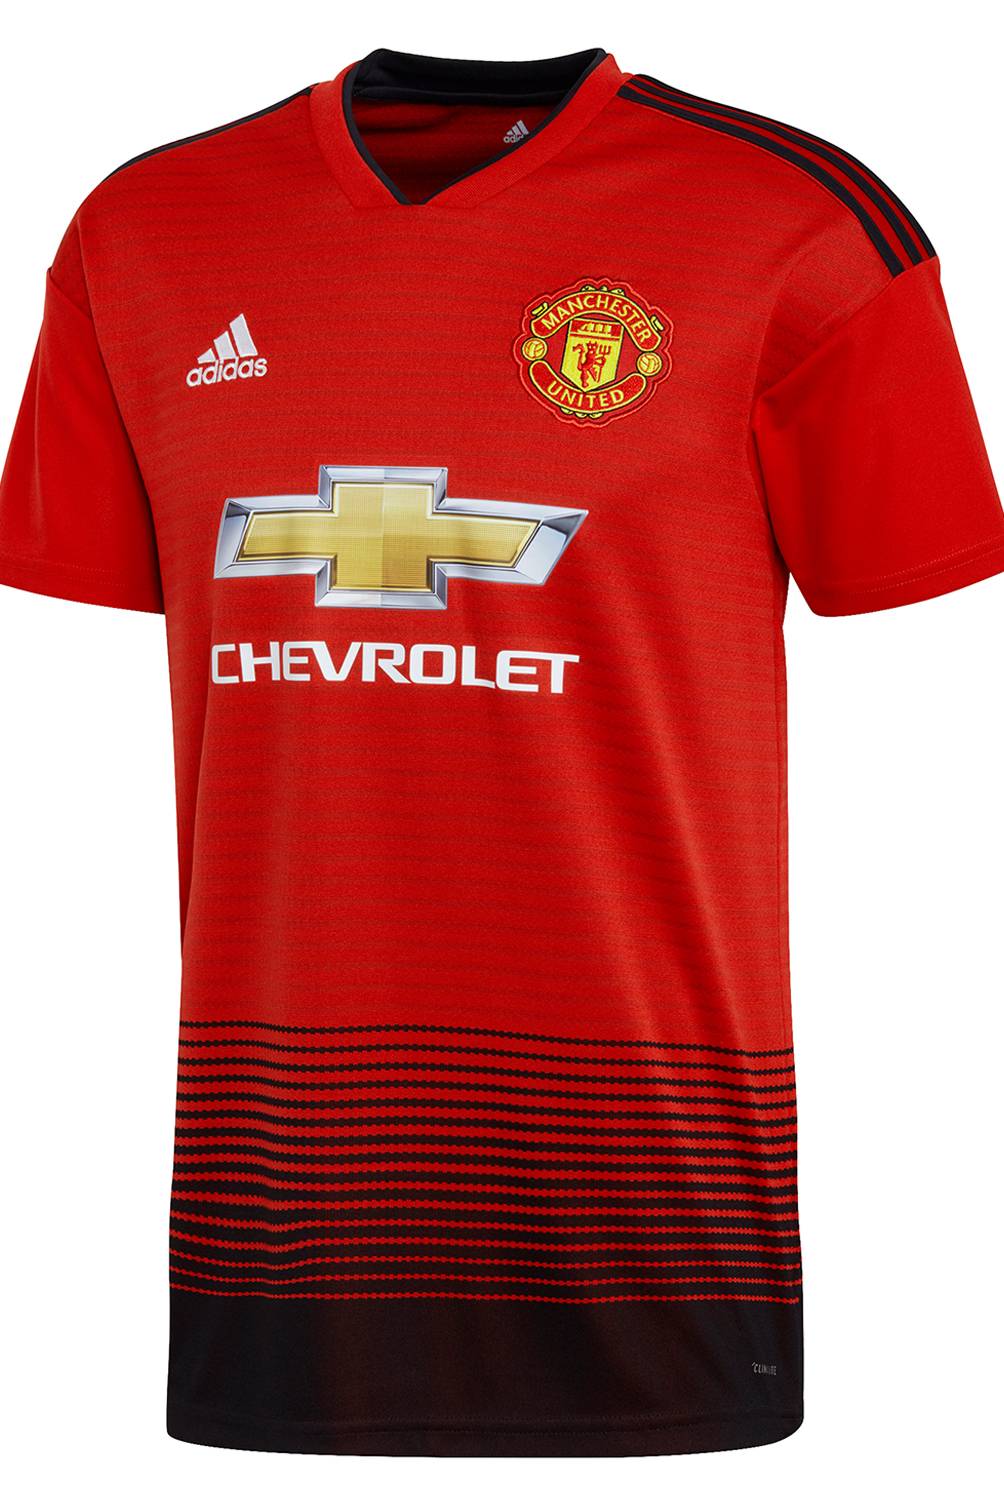 adidas - Camiseta Manchester United